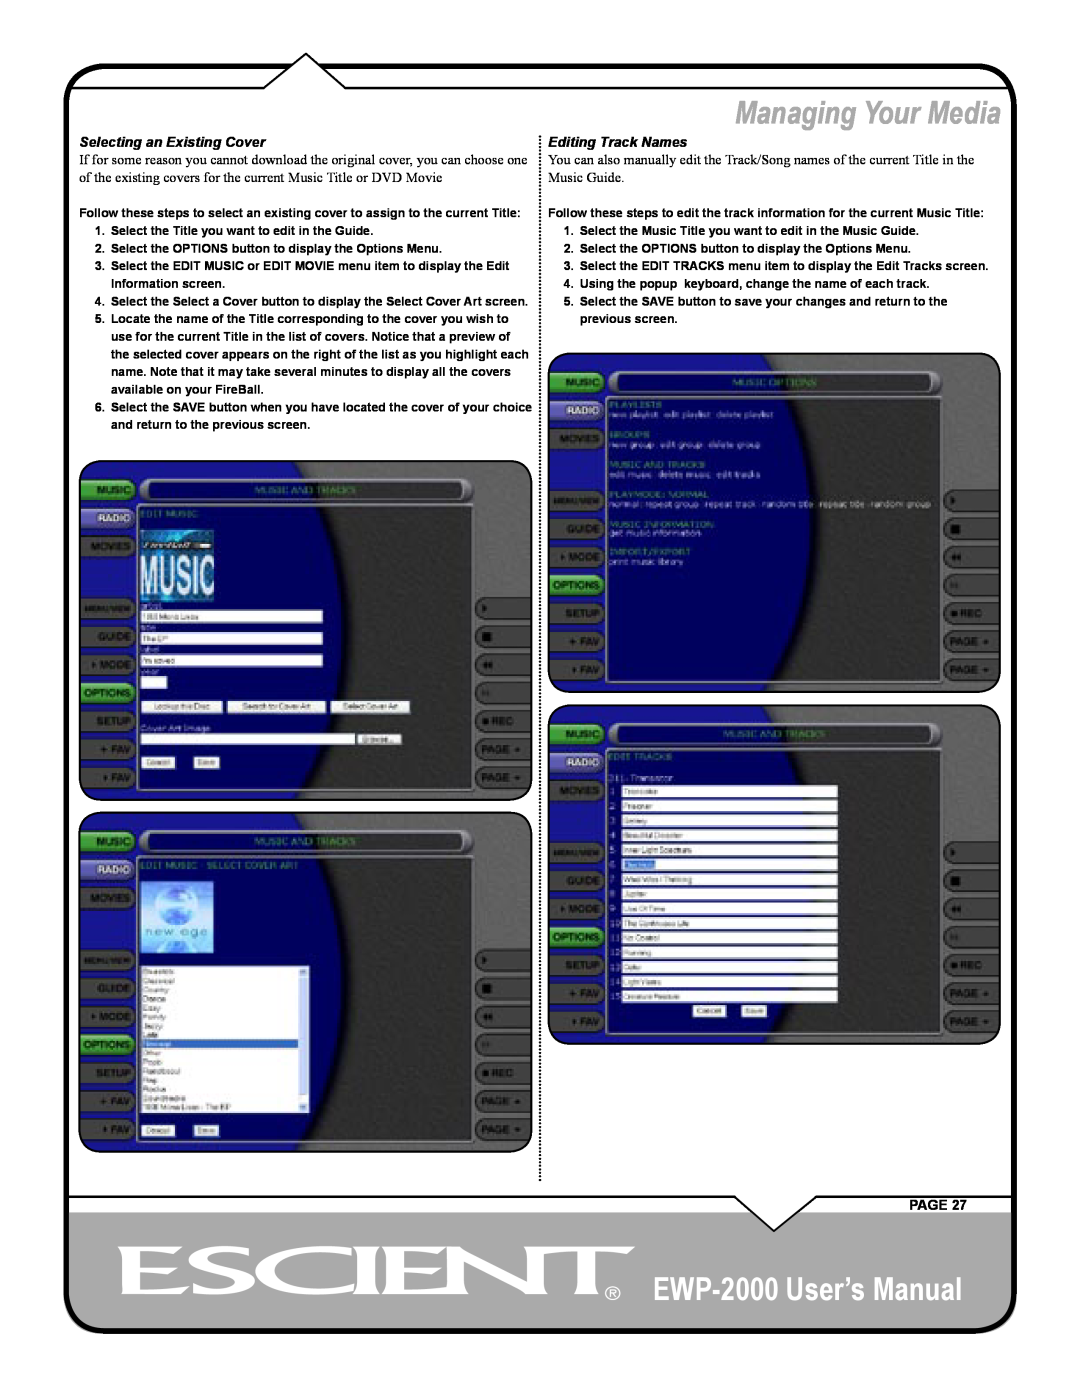 Escient user manual Managing Your Media, EWP-2000 User’s Manual, Page 